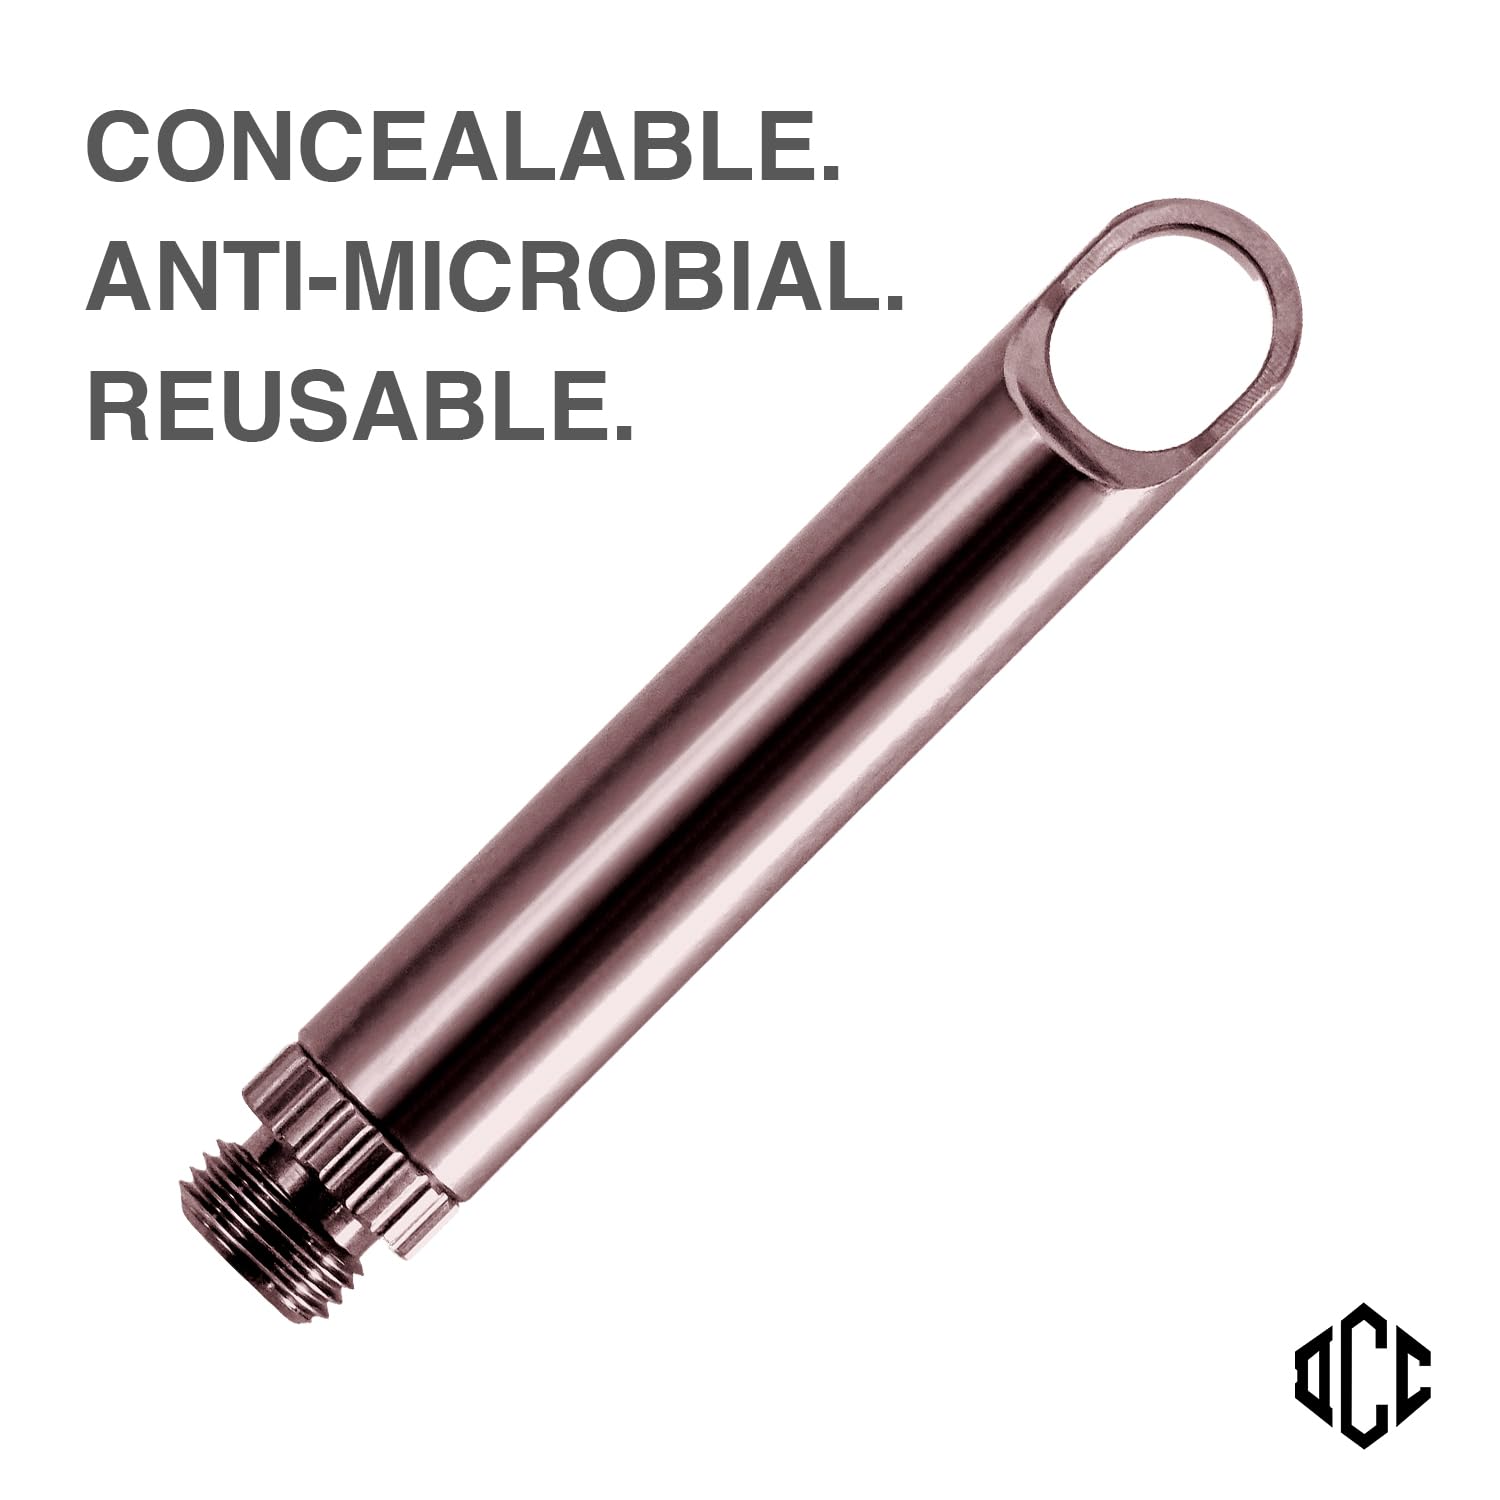 DAILYCARRYCO. TiPick Titanium Toothpick Keychain Holder - Portable Metal Travel Toothpick - Reusable EDC Micro Toothpick - Compact & Convenient - Carry On-the-Go - Titanium Construction, Merlot